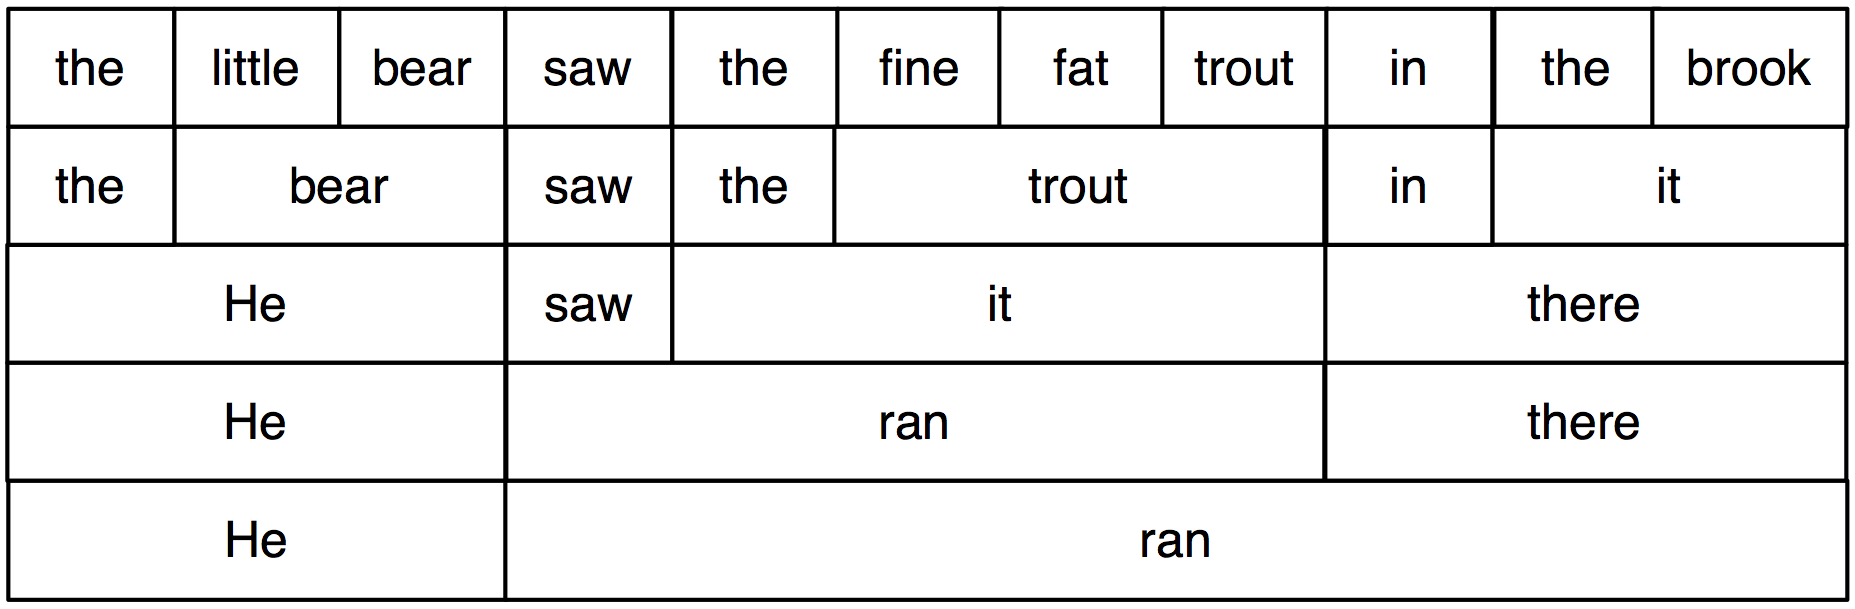 8. analyzing sentence structure